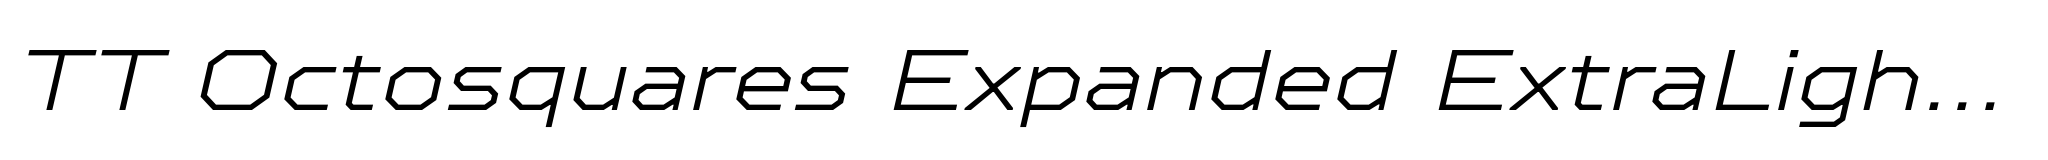 TT Octosquares Expanded ExtraLight Italic image